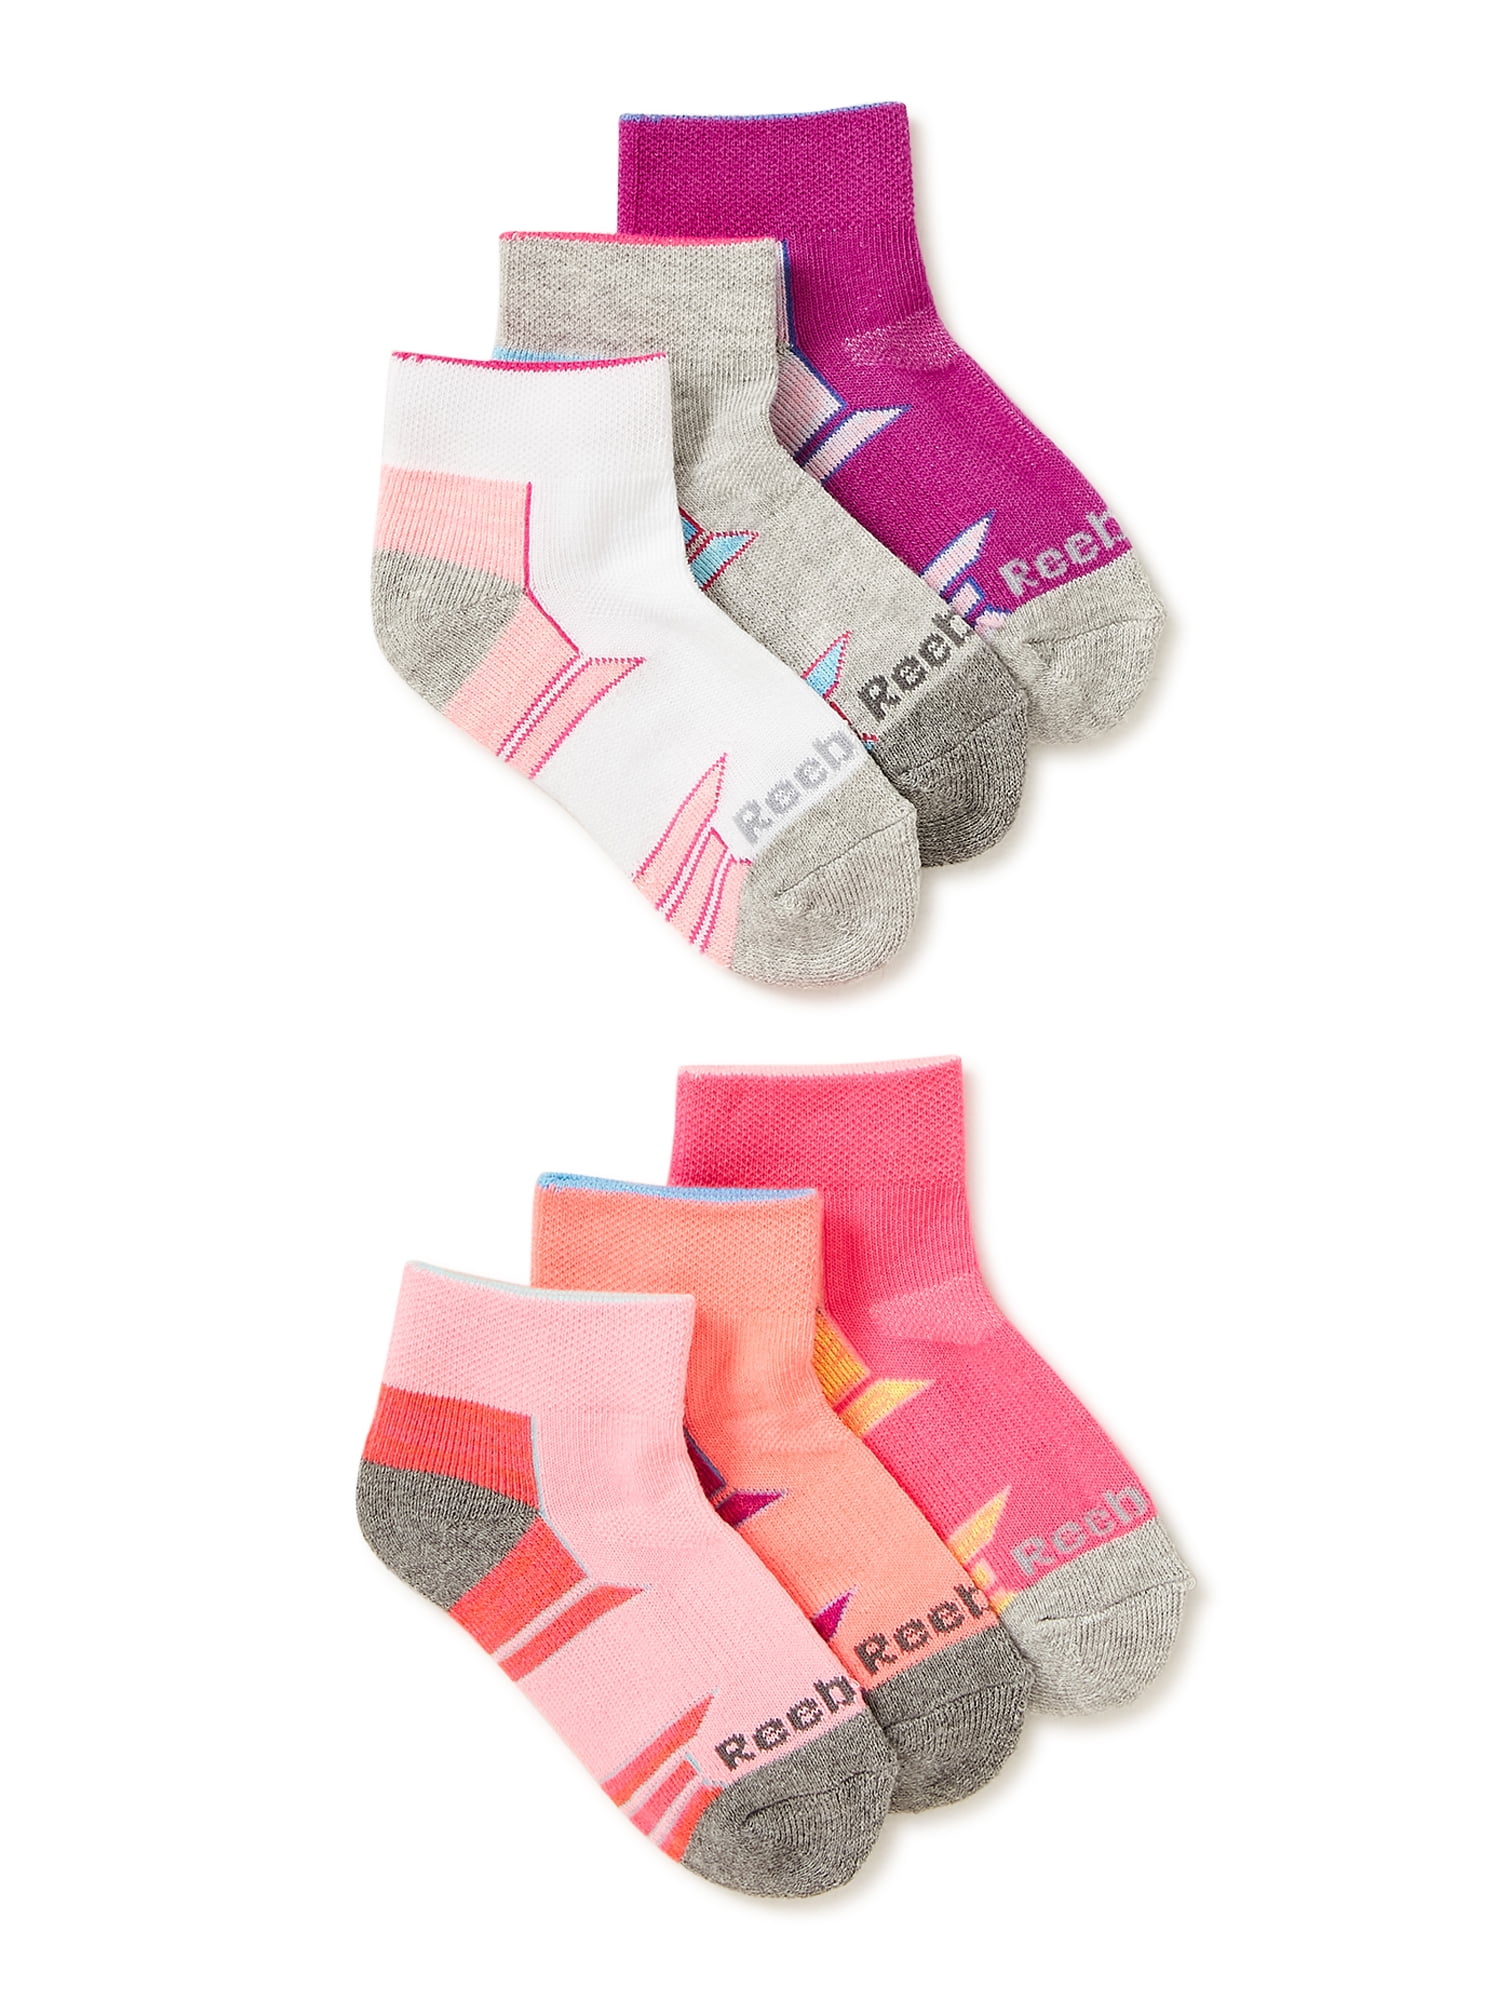 Girls Toddler Kids Children Cotton School Soft Trainer Socks 3 Pairs Multi Buy 